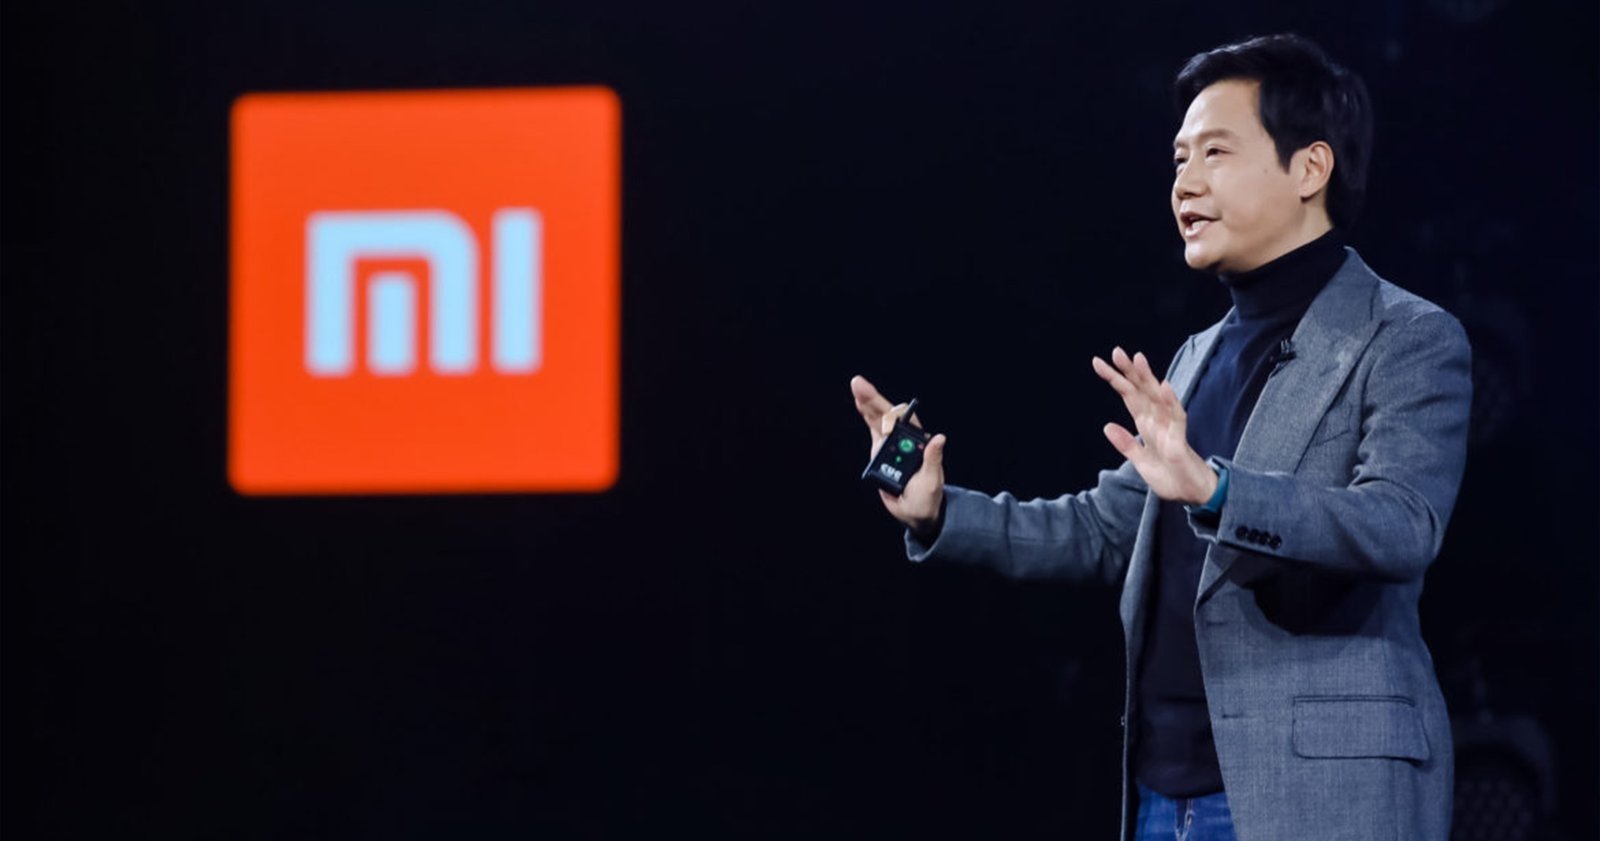 Estados Unidos retirará por fin a Xiaomi de su lista negra